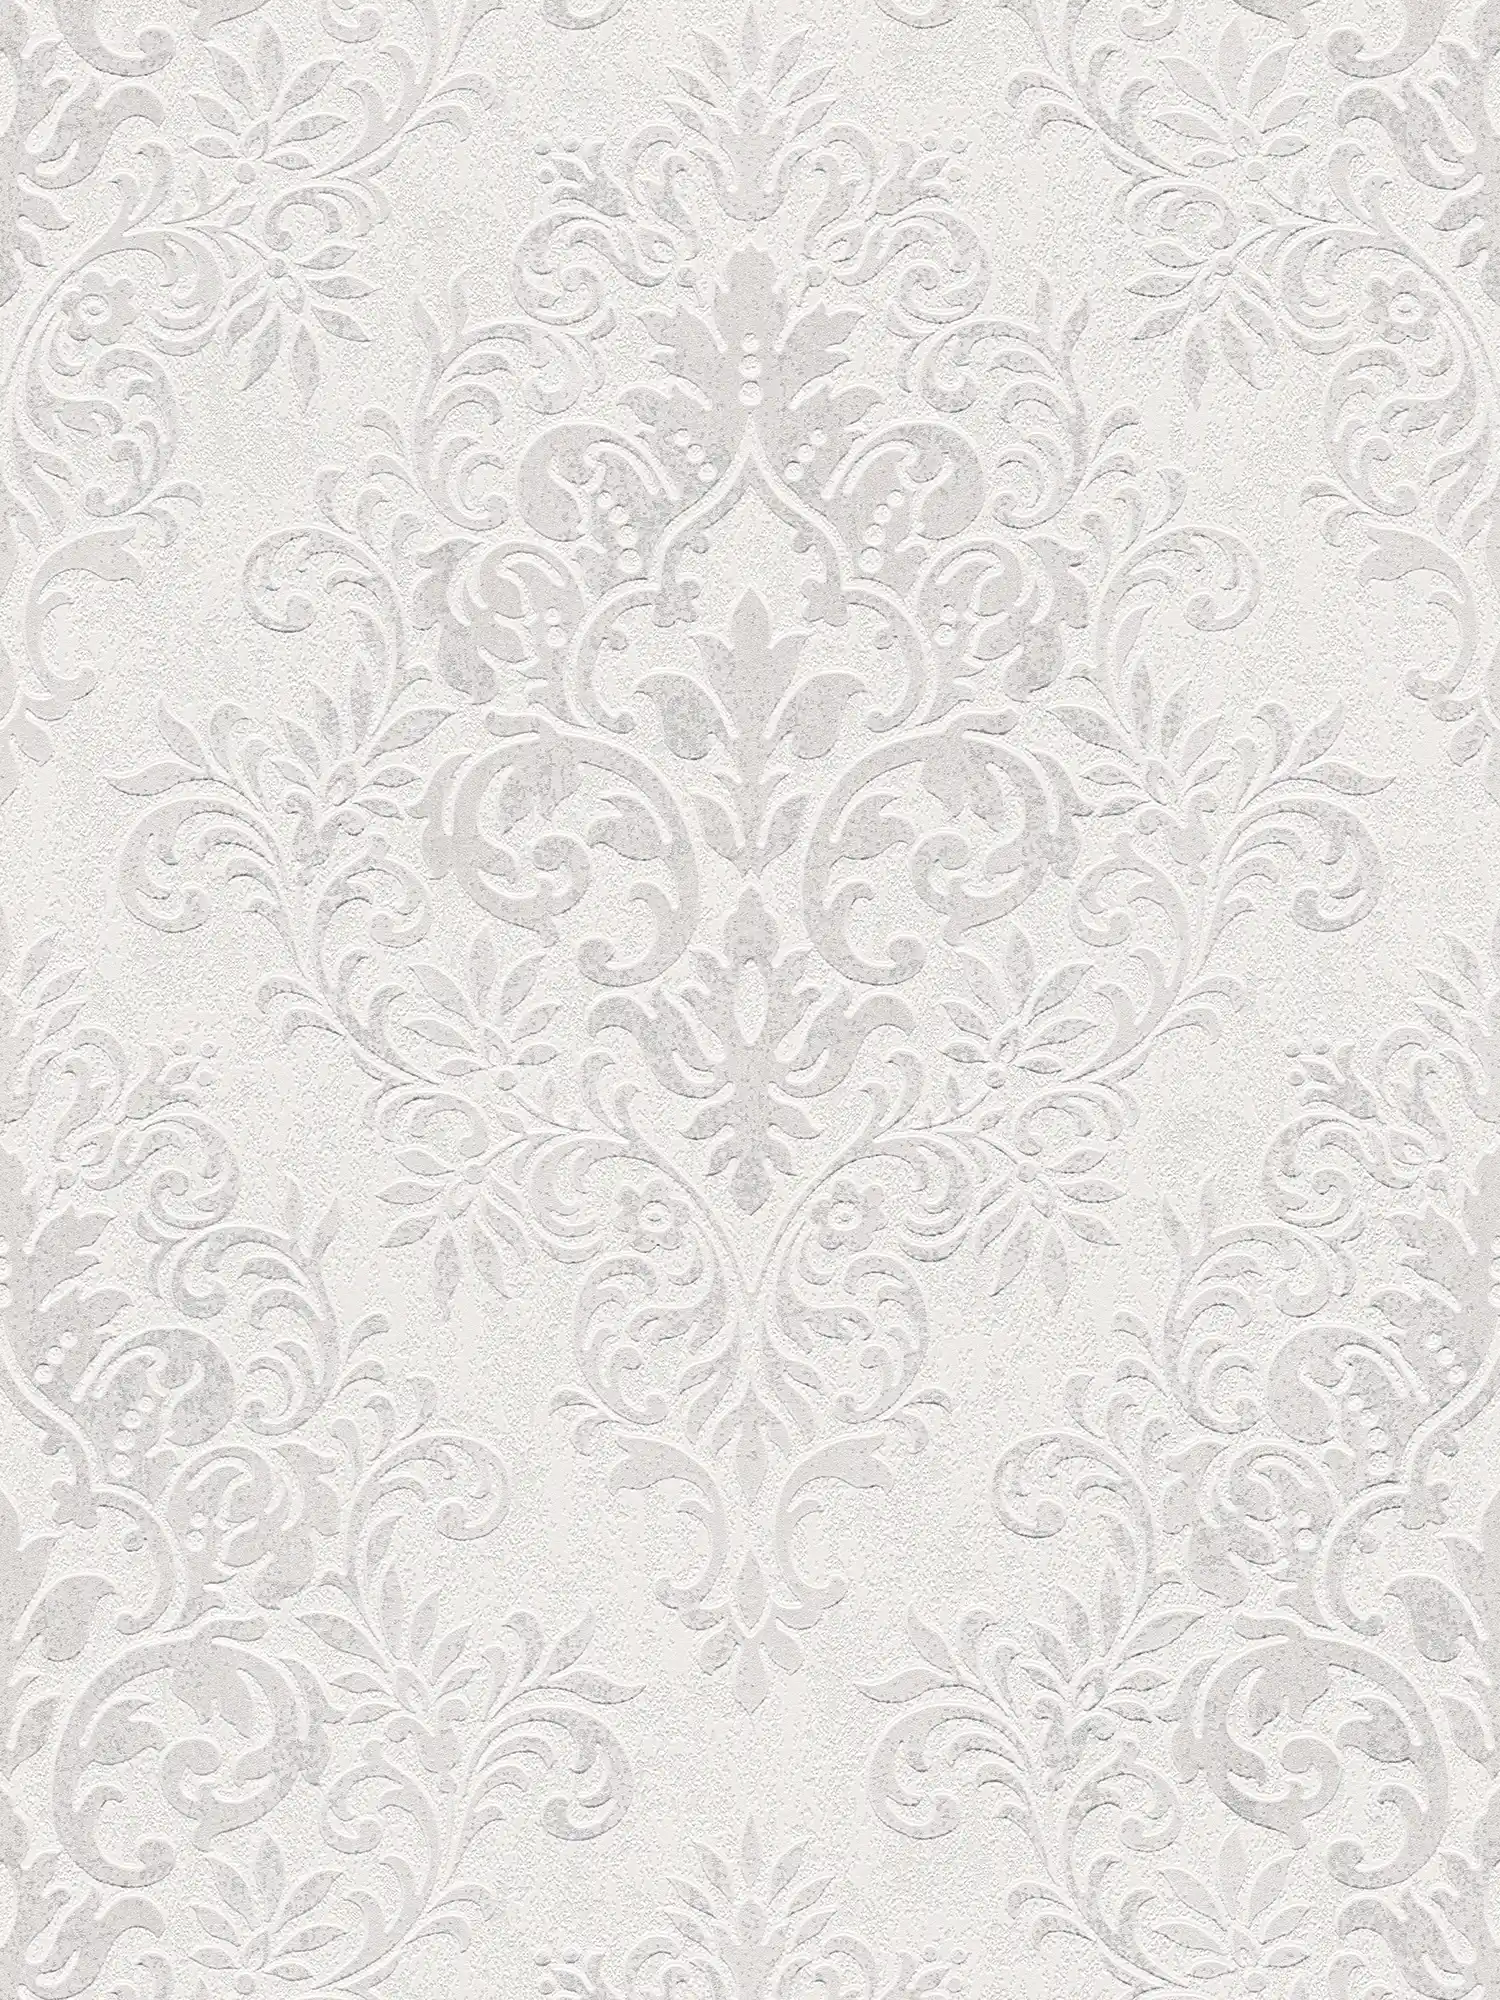 Non-woven wallpaper ornament design with metallic accents - grey
